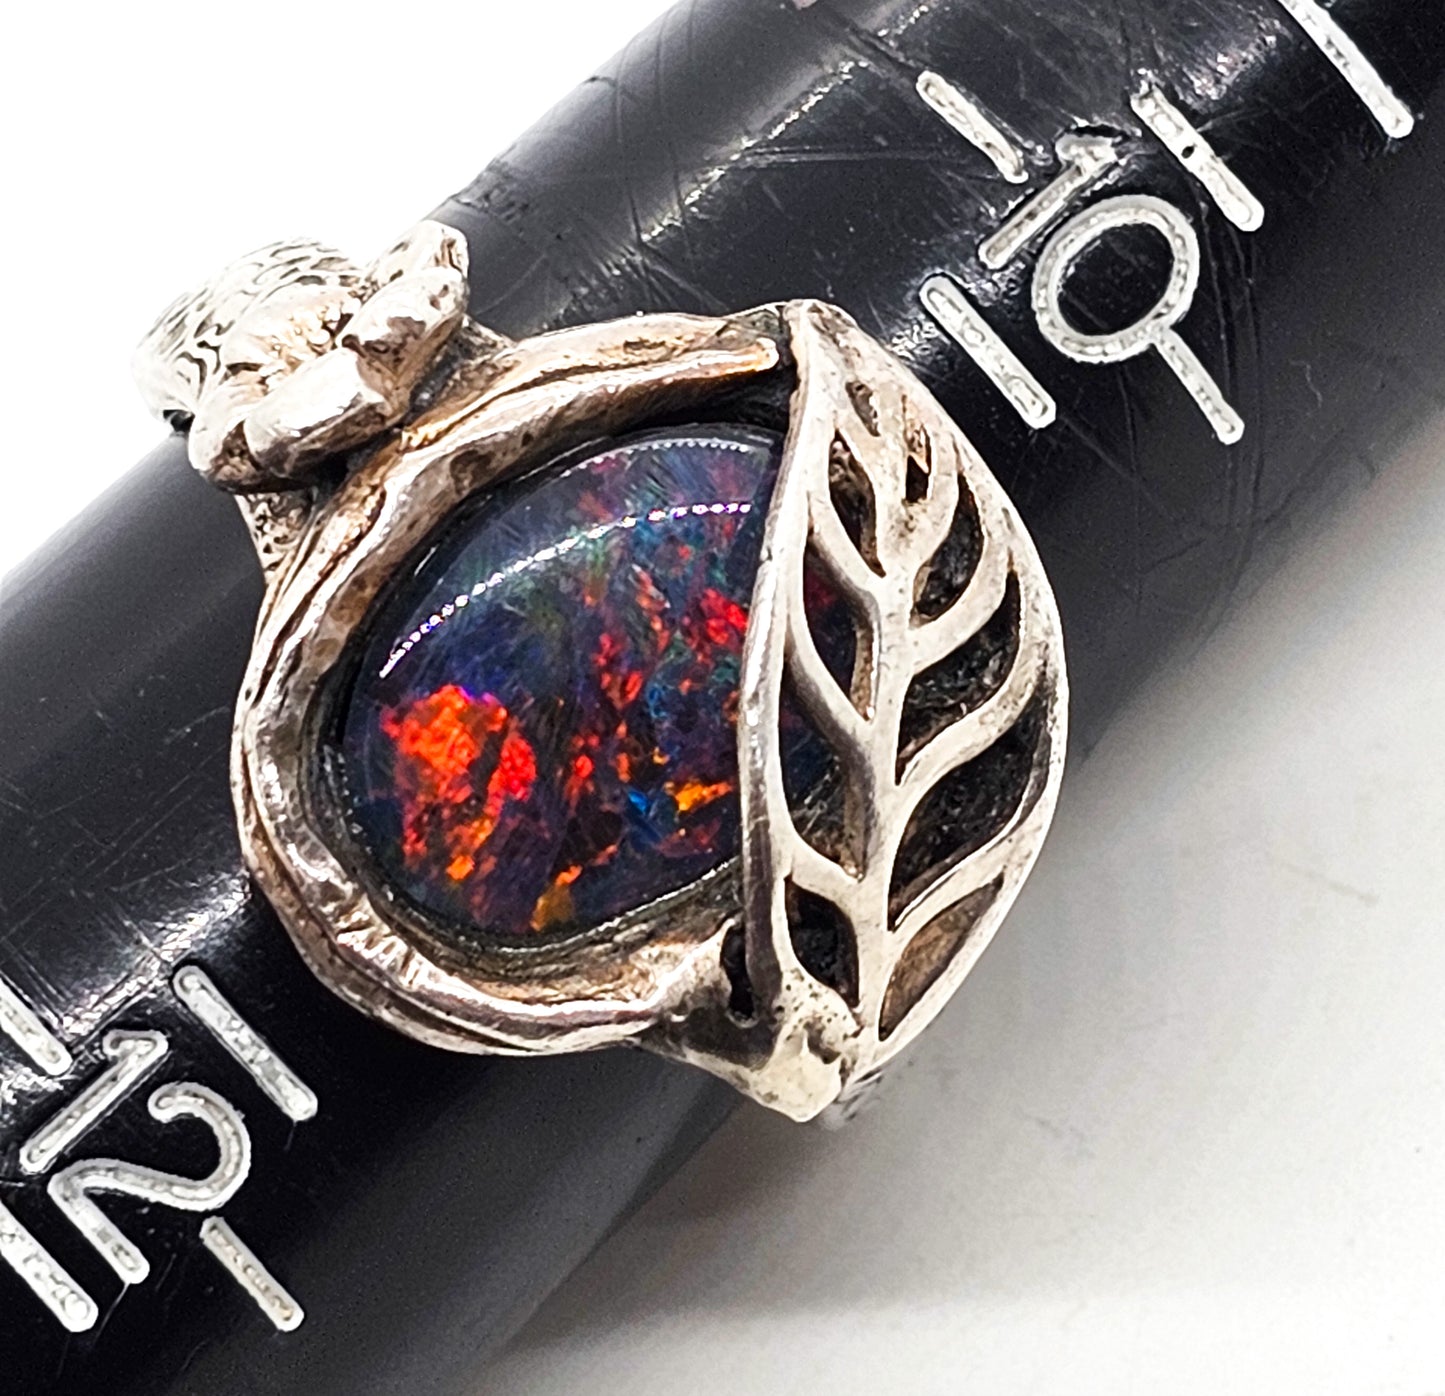 Black opal doublet casted artisan signed flower embossed sterling silver ring size 11